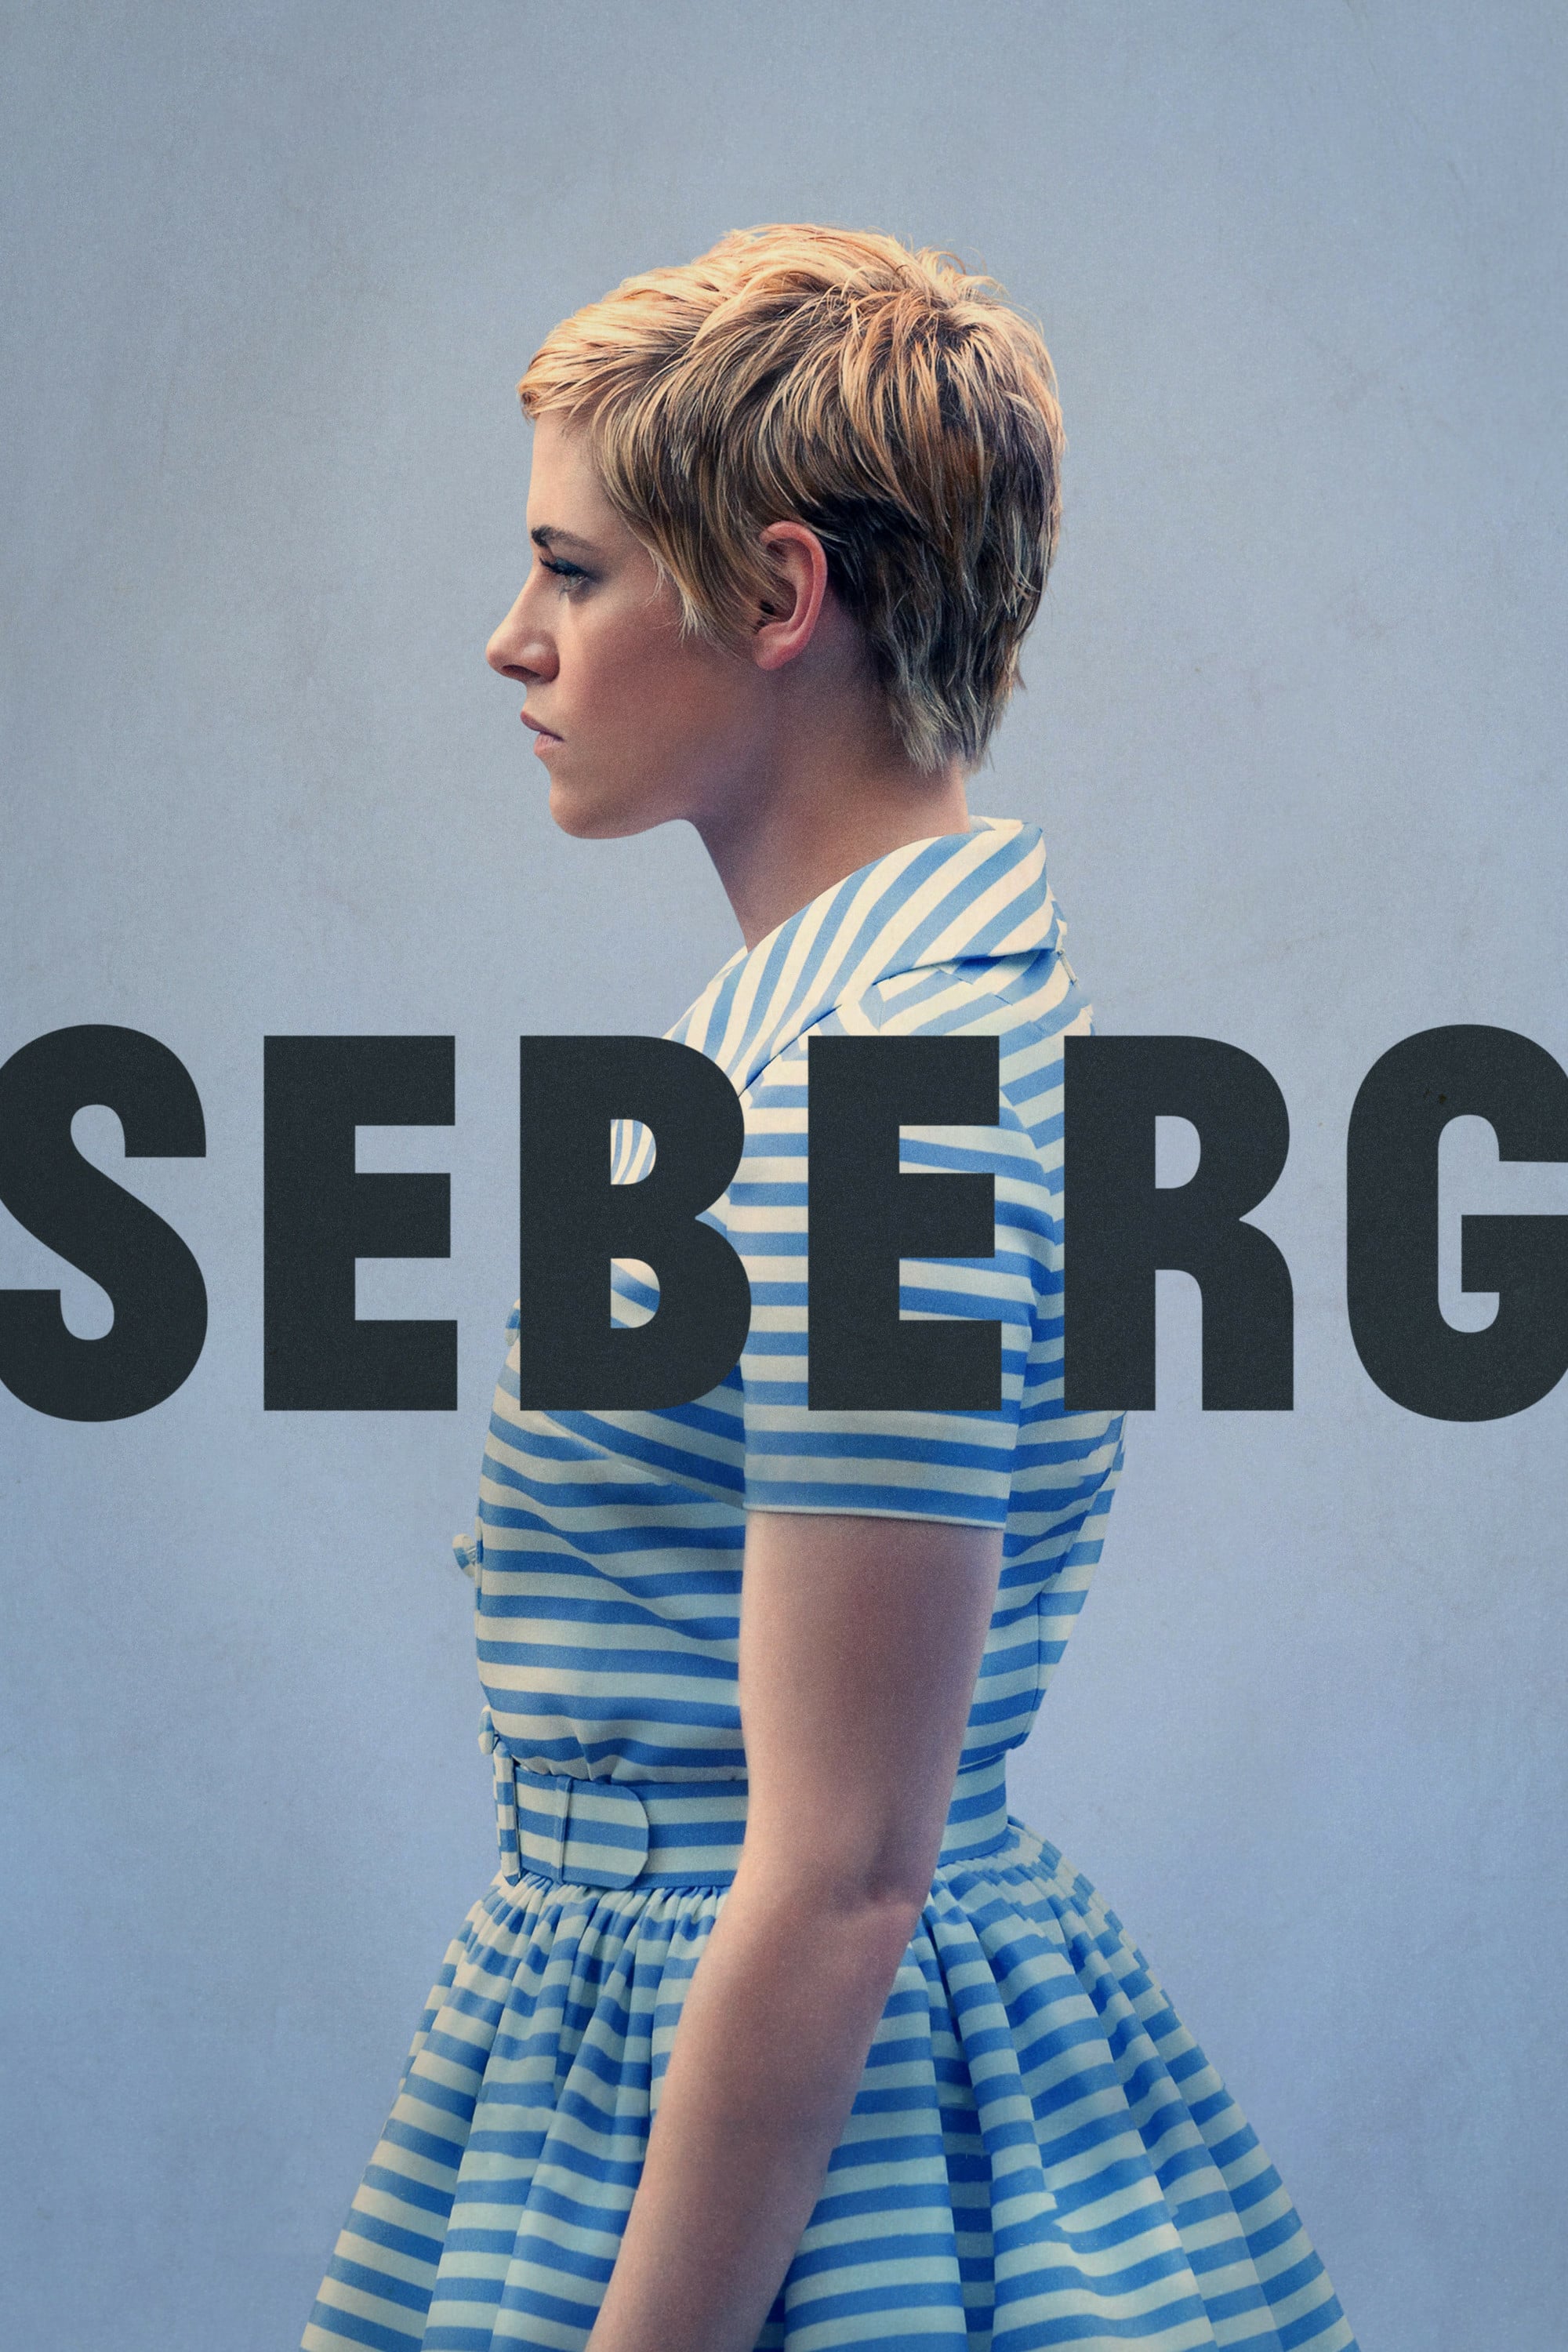 Plakat von "Seberg"